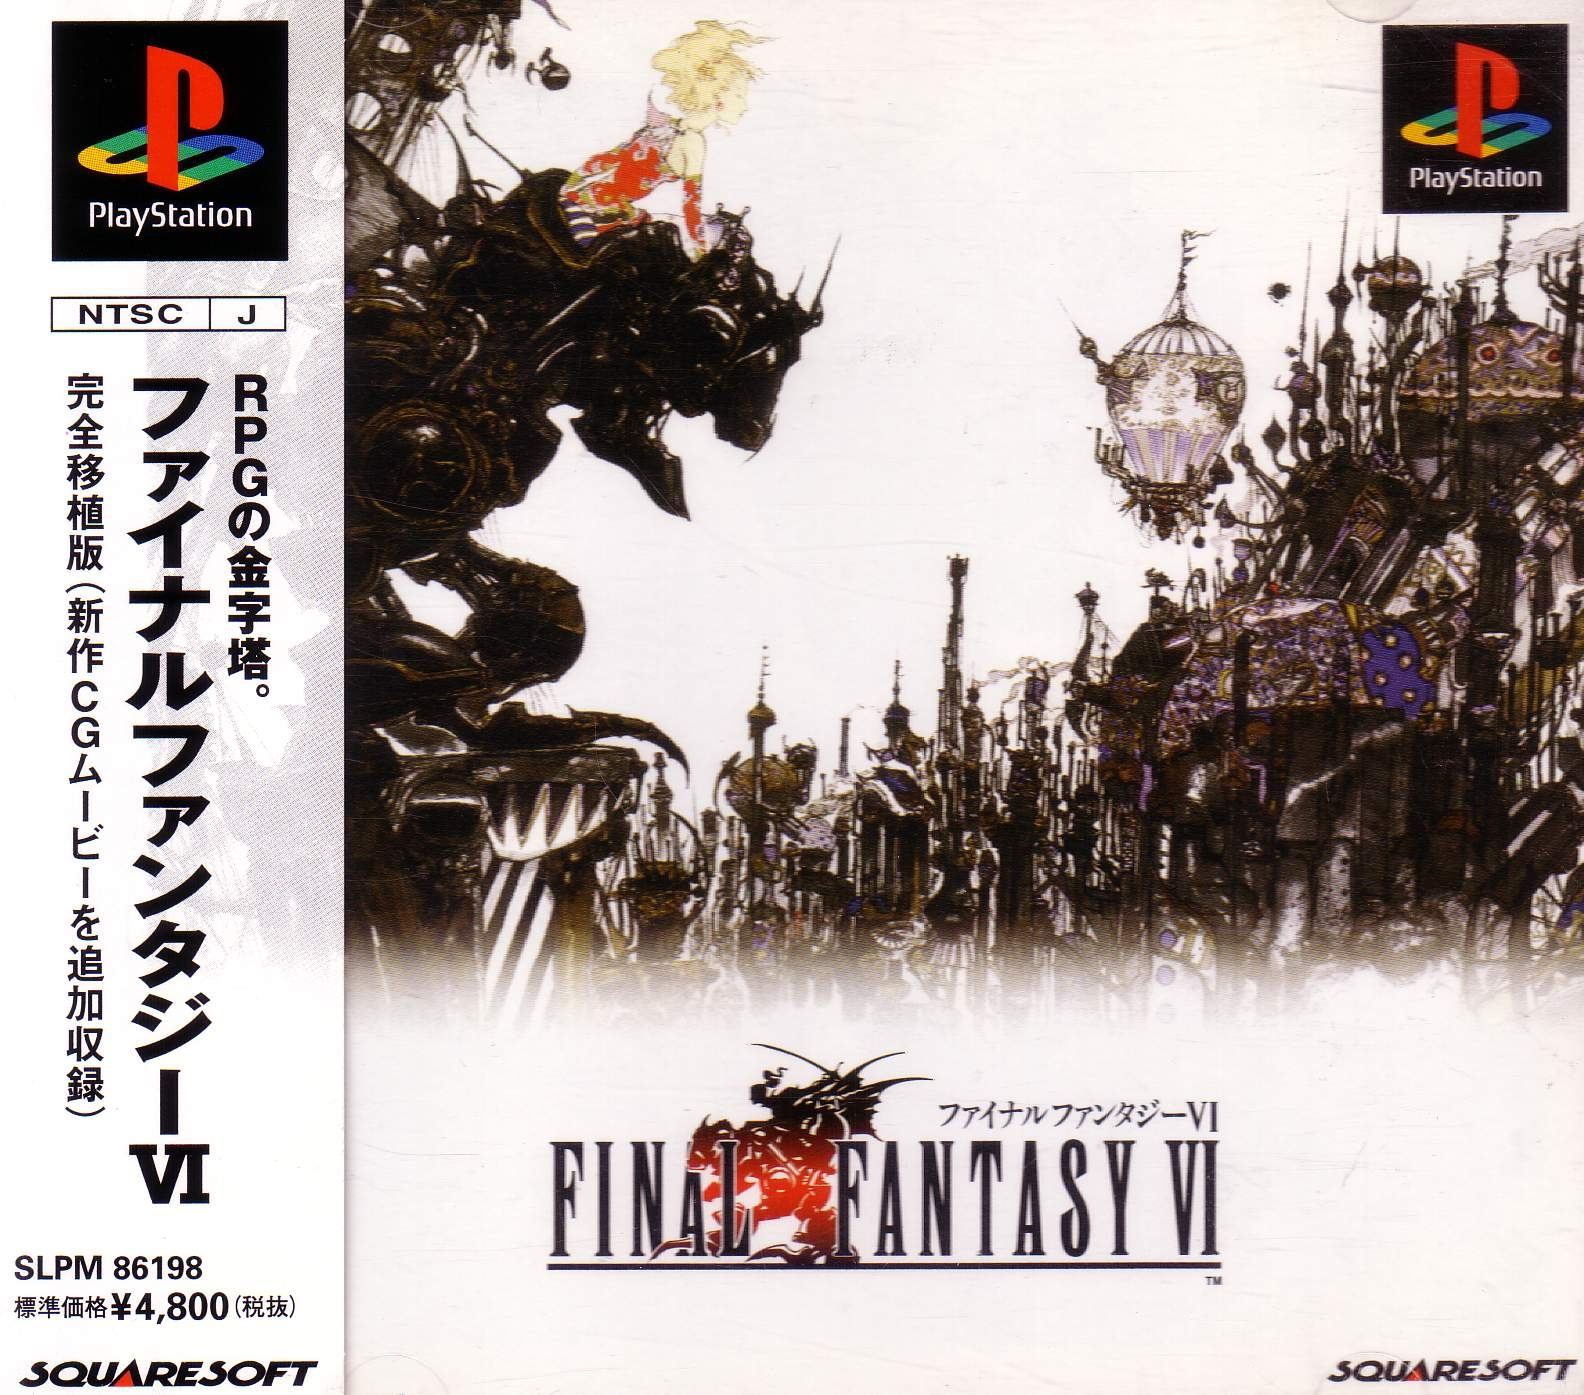 Final Fantasy VI for PlayStation